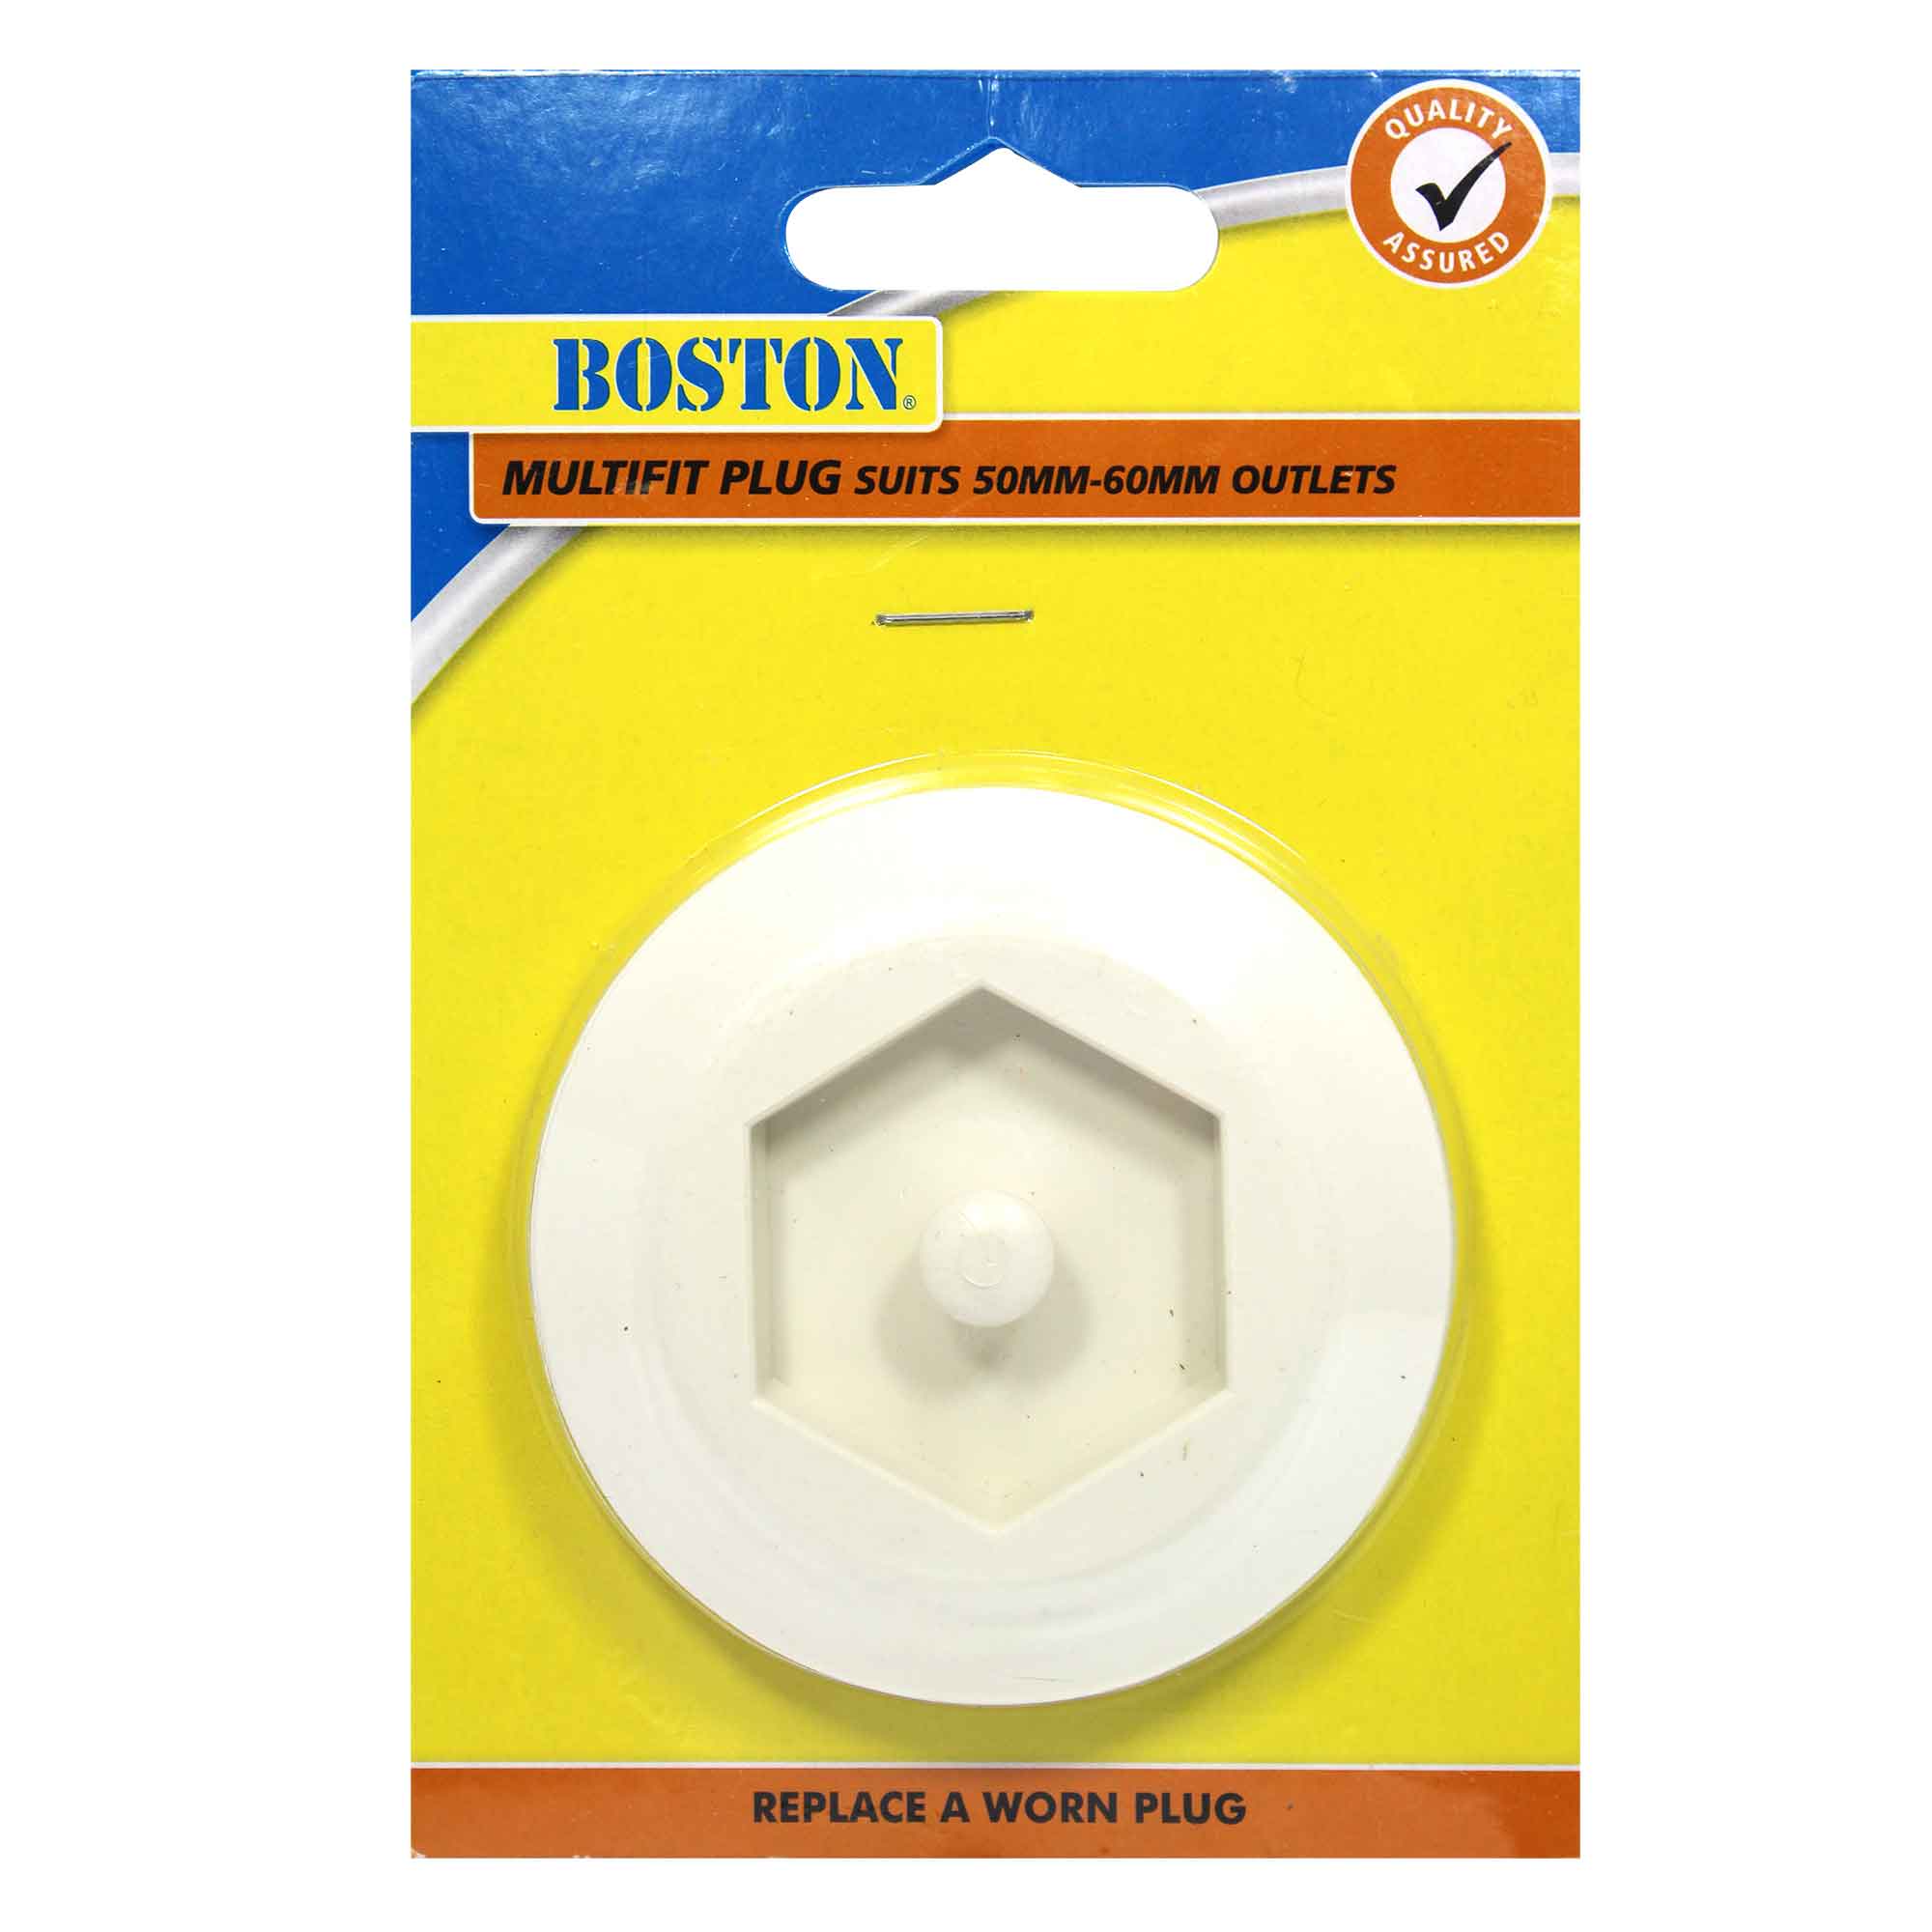 BOSTON Multifit Plug Suits 50-60mm Basin & Bath Outlets 436016 - Double Bay Hardware